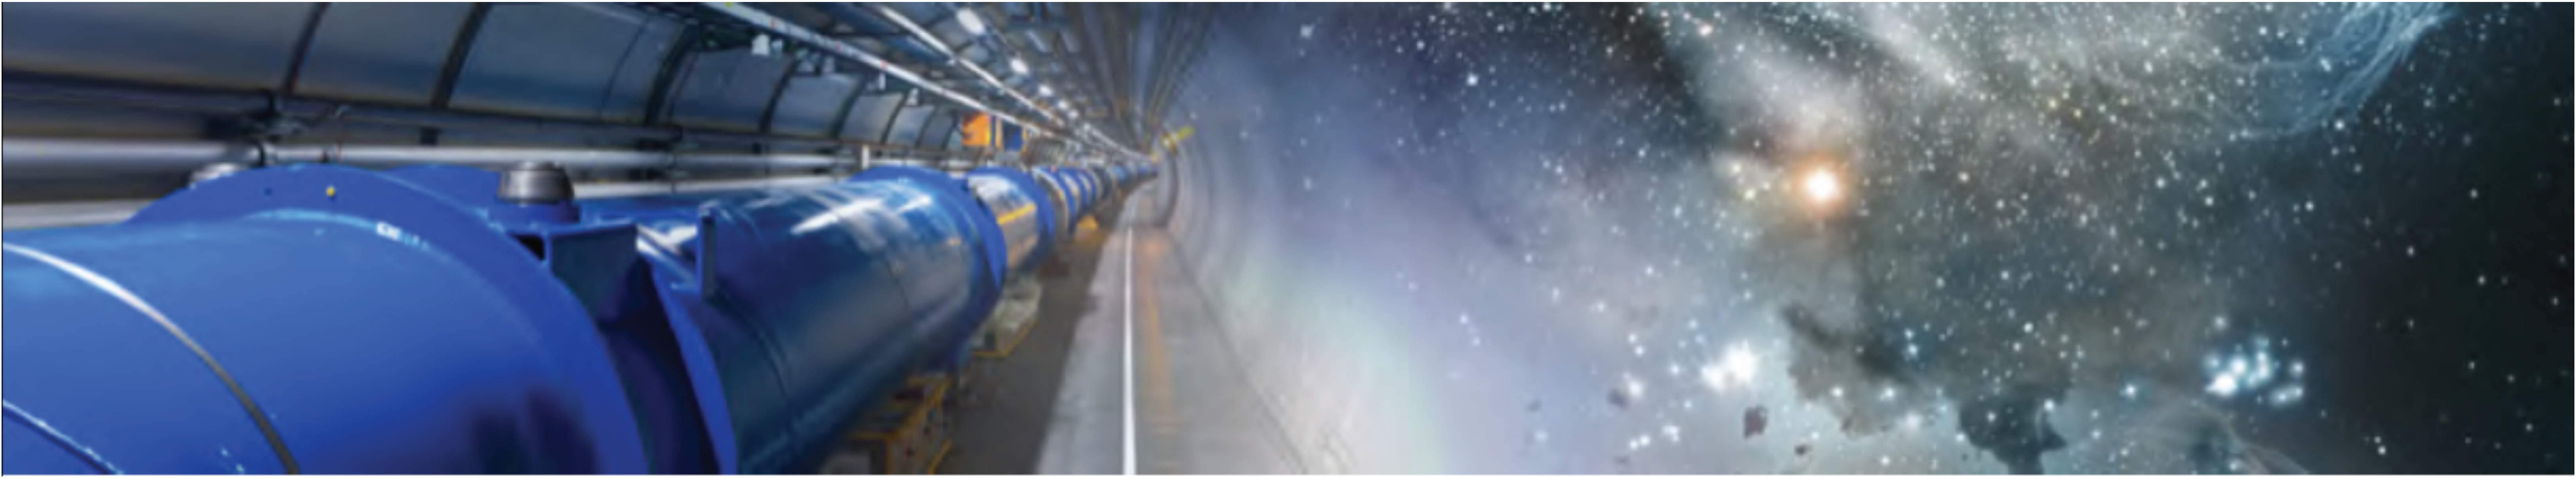 LHC_pic.jpg